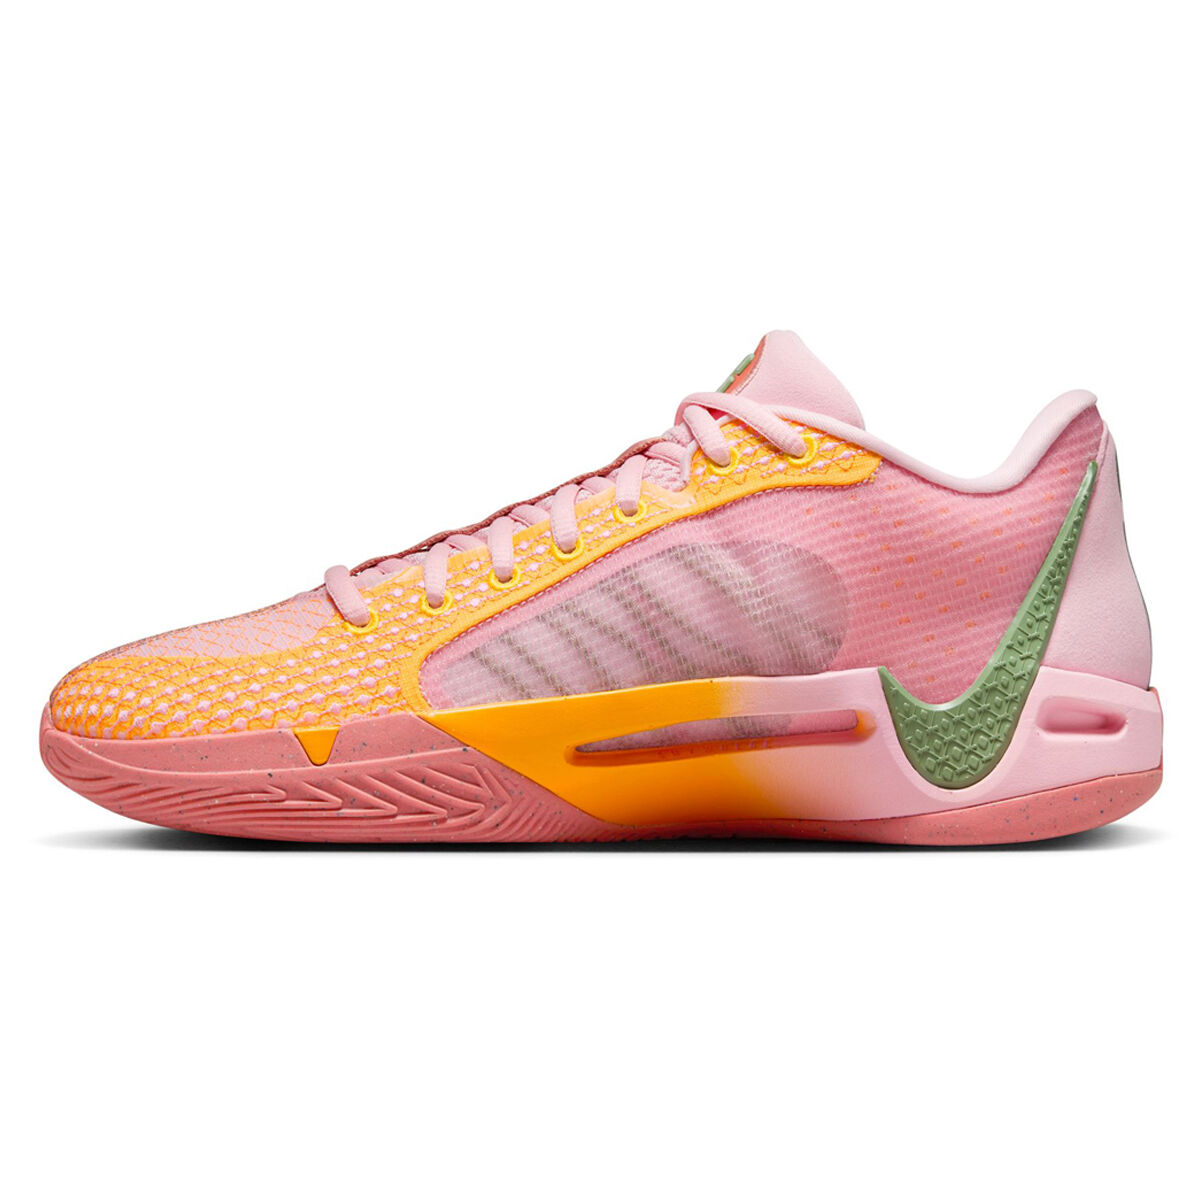 Women's Basketball Shoes - Nike, adidas & more - rebel